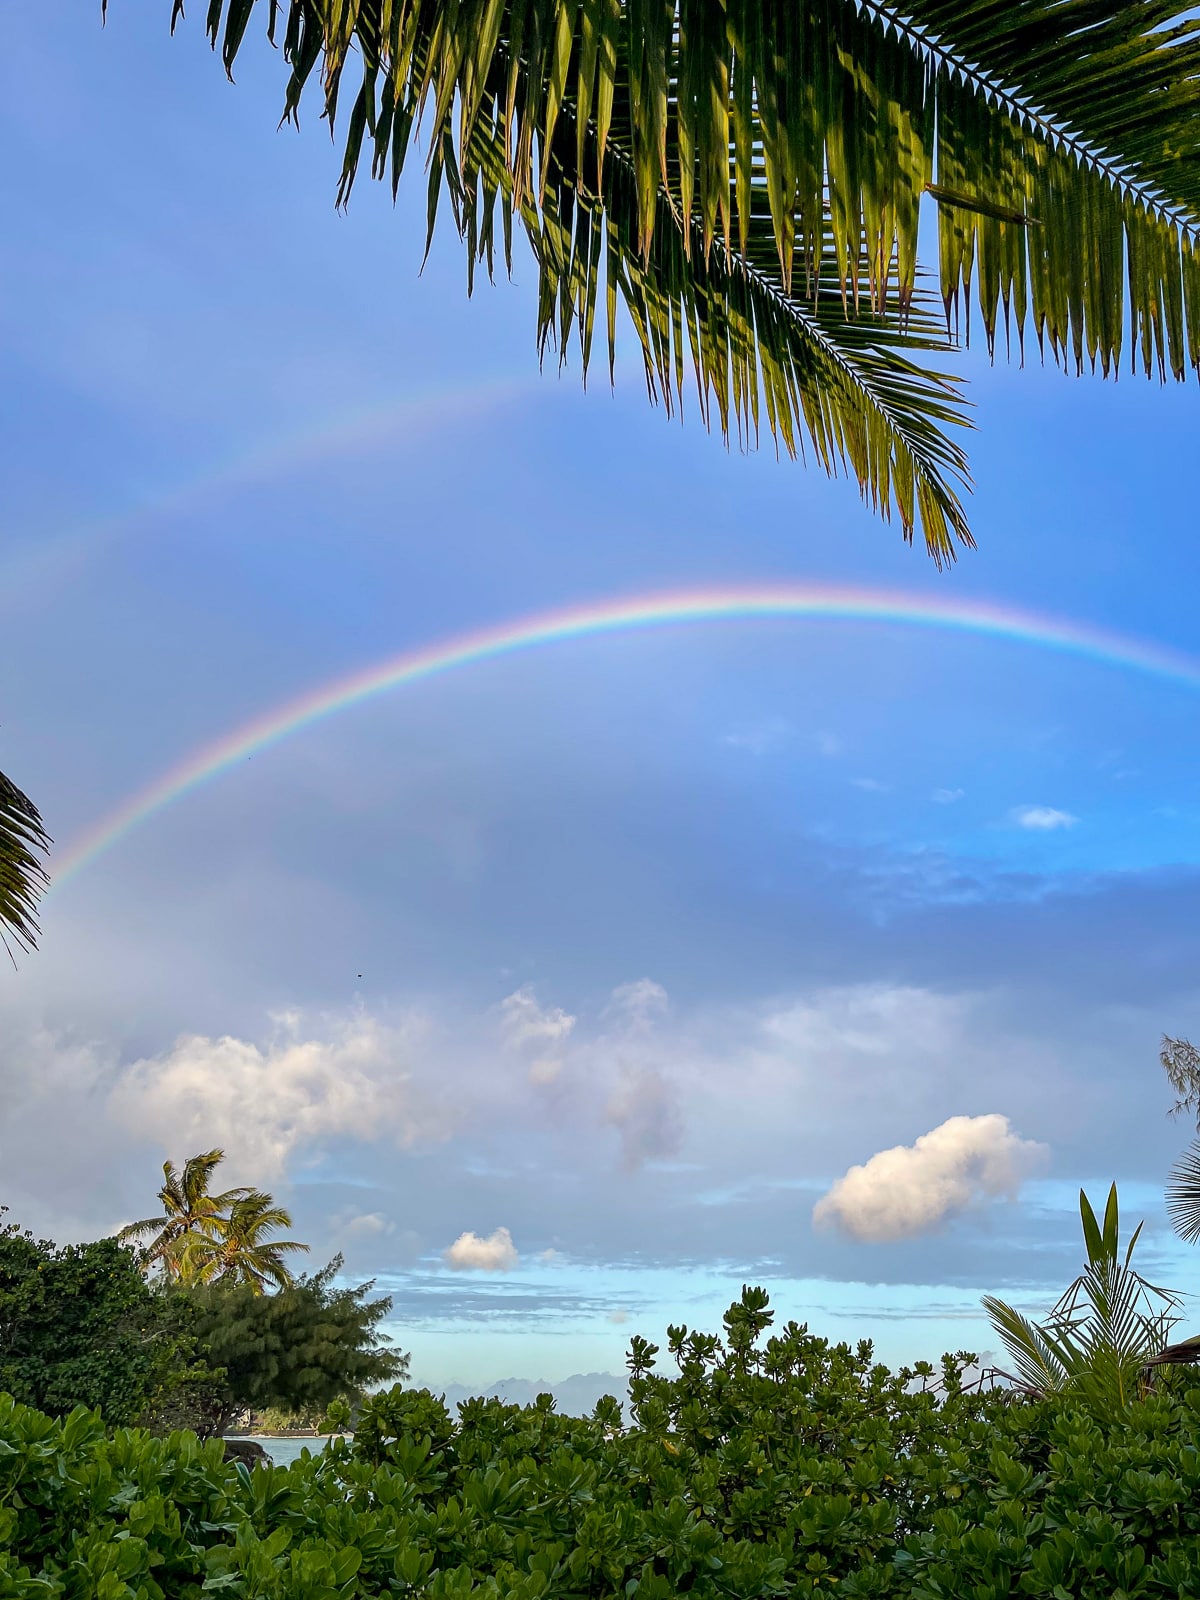 A double rainbow in Oahu.